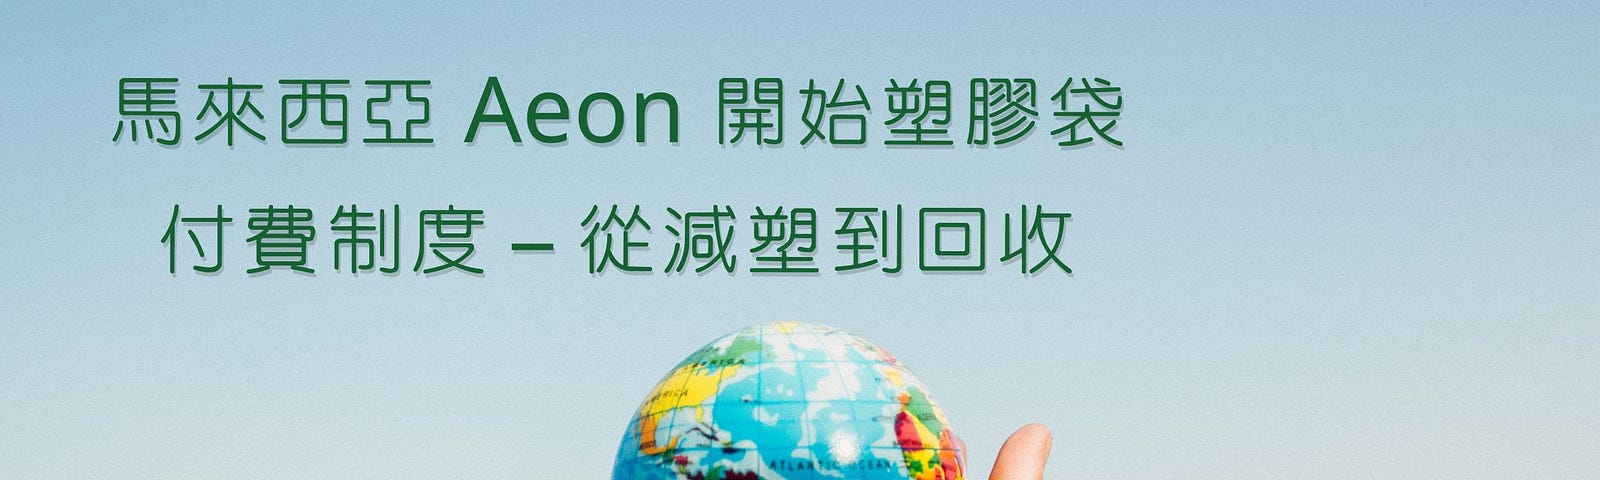 Aeon 開始塑膠袋付費制度